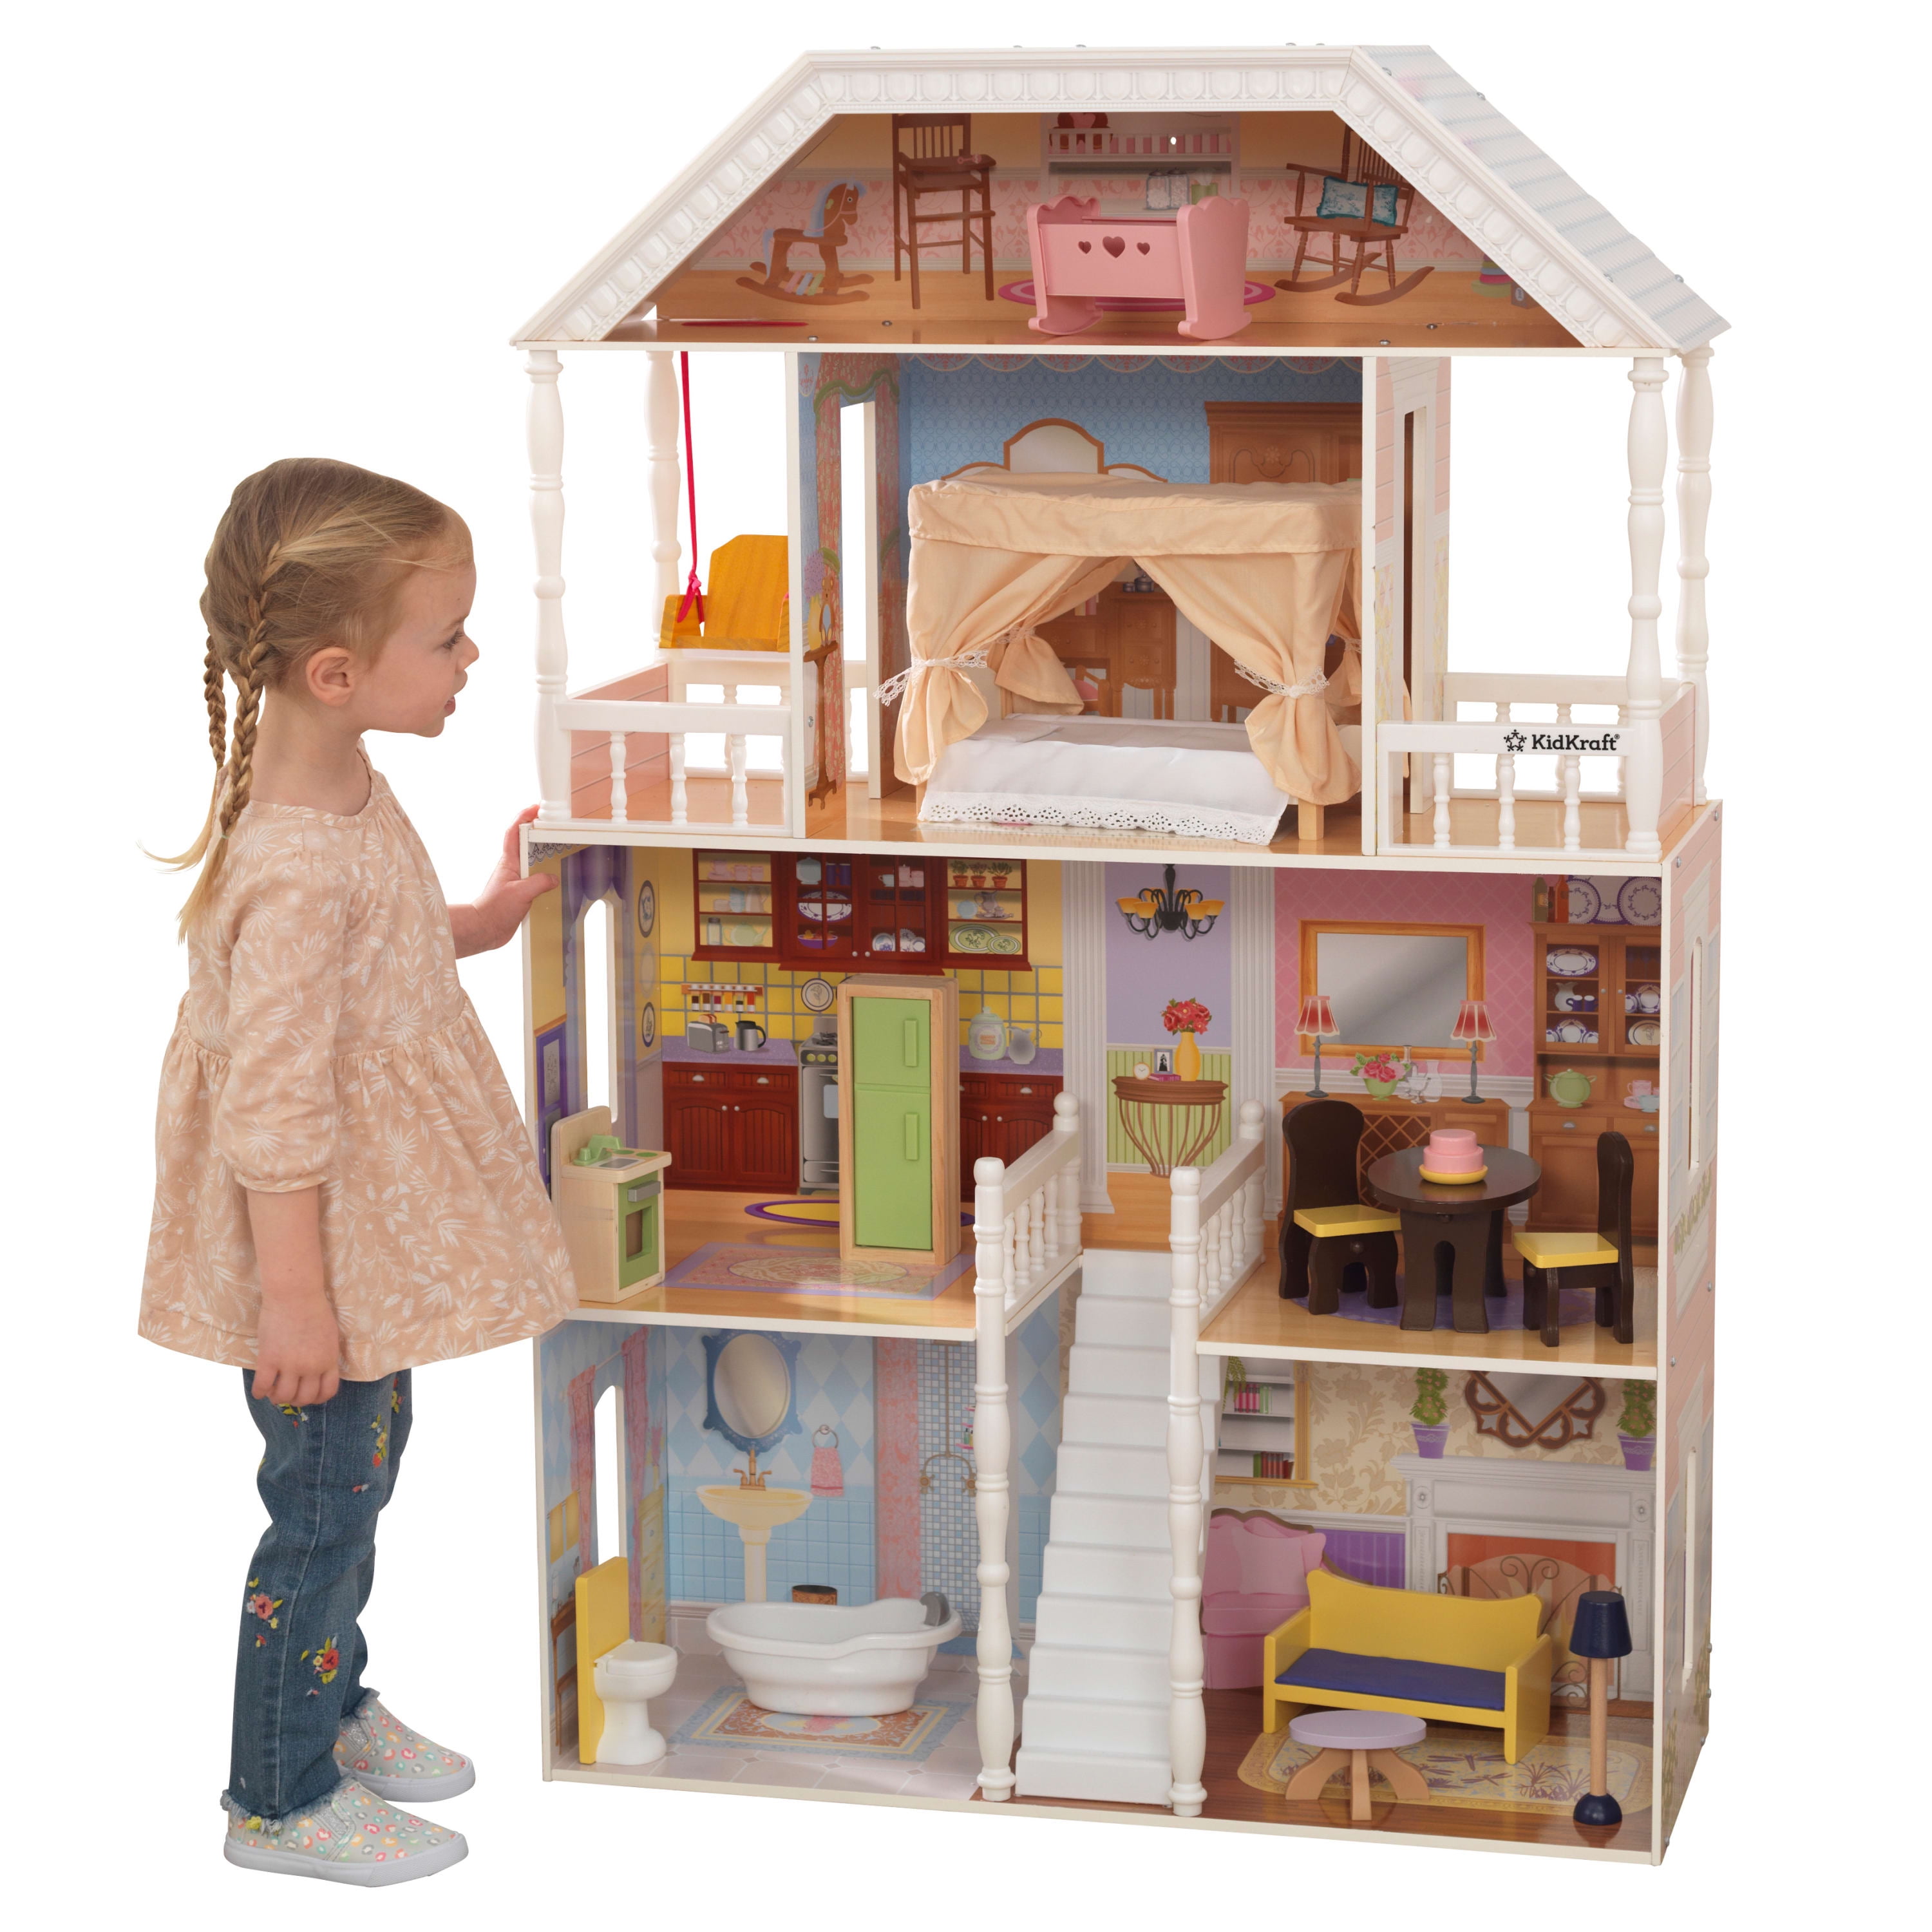 Kidkraft kidcraft dolls house 